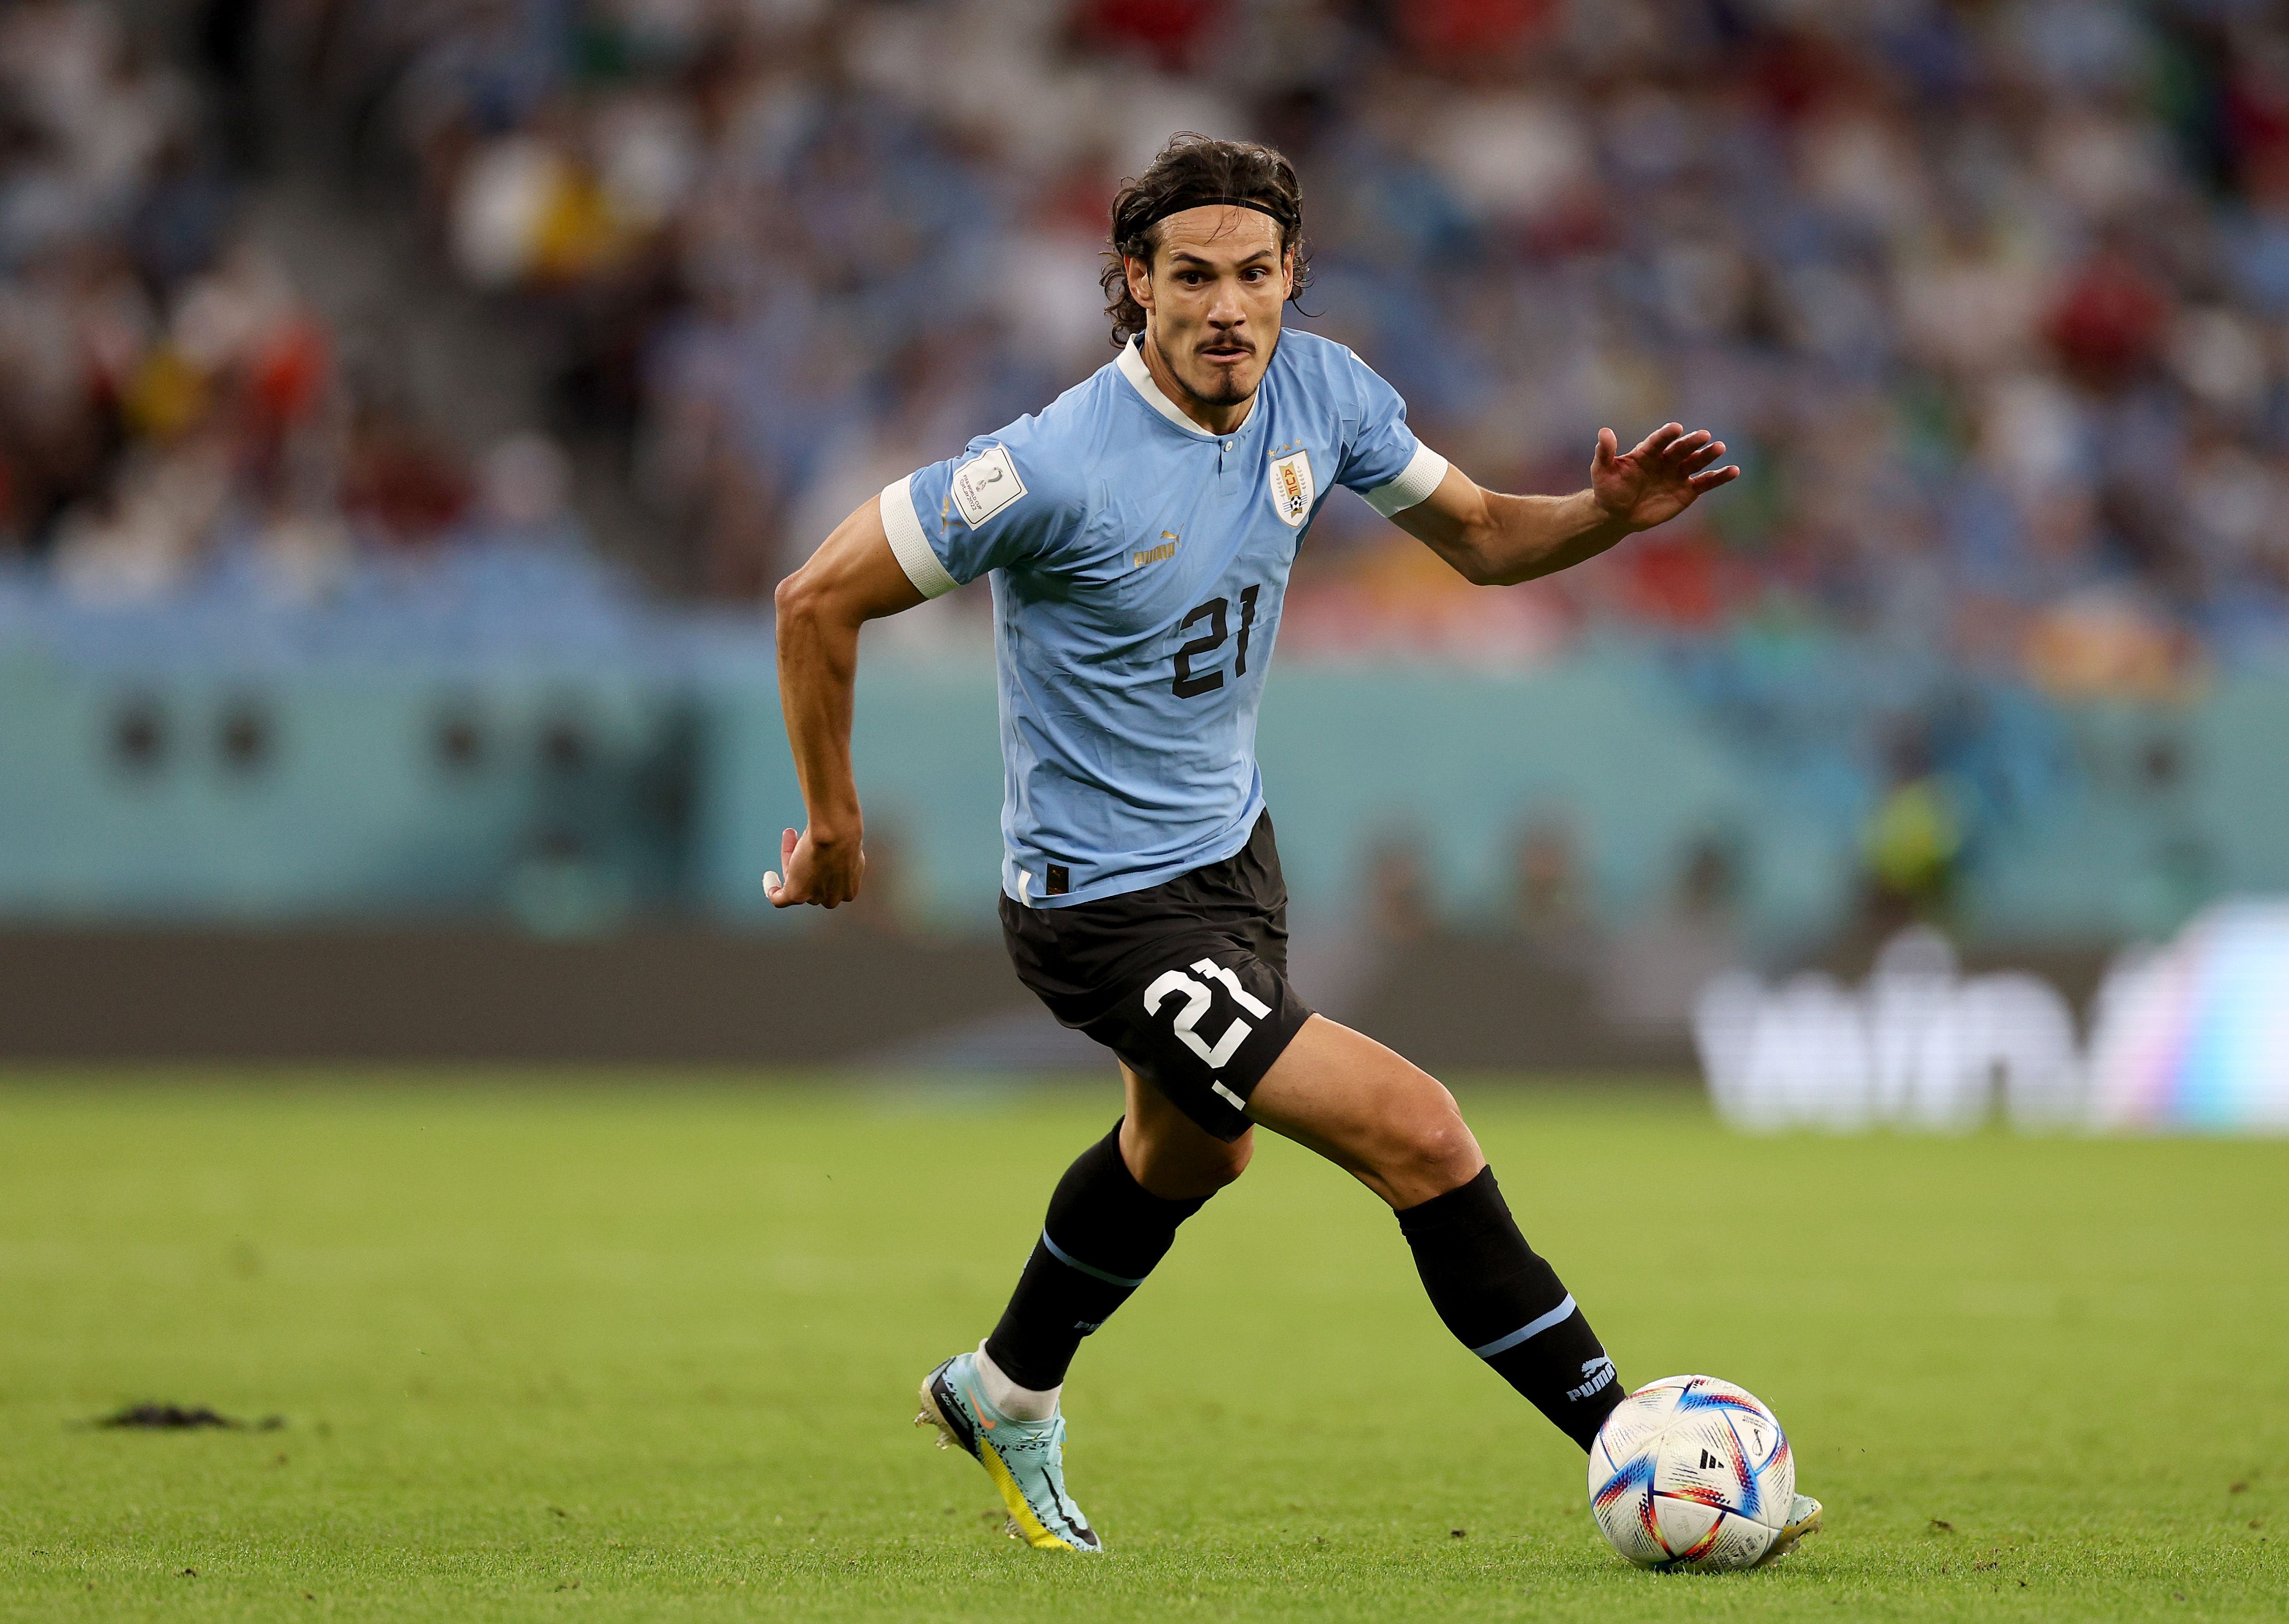 Edinson Cavani #21 of Uruguay takes the ball in the second half against South Korea 